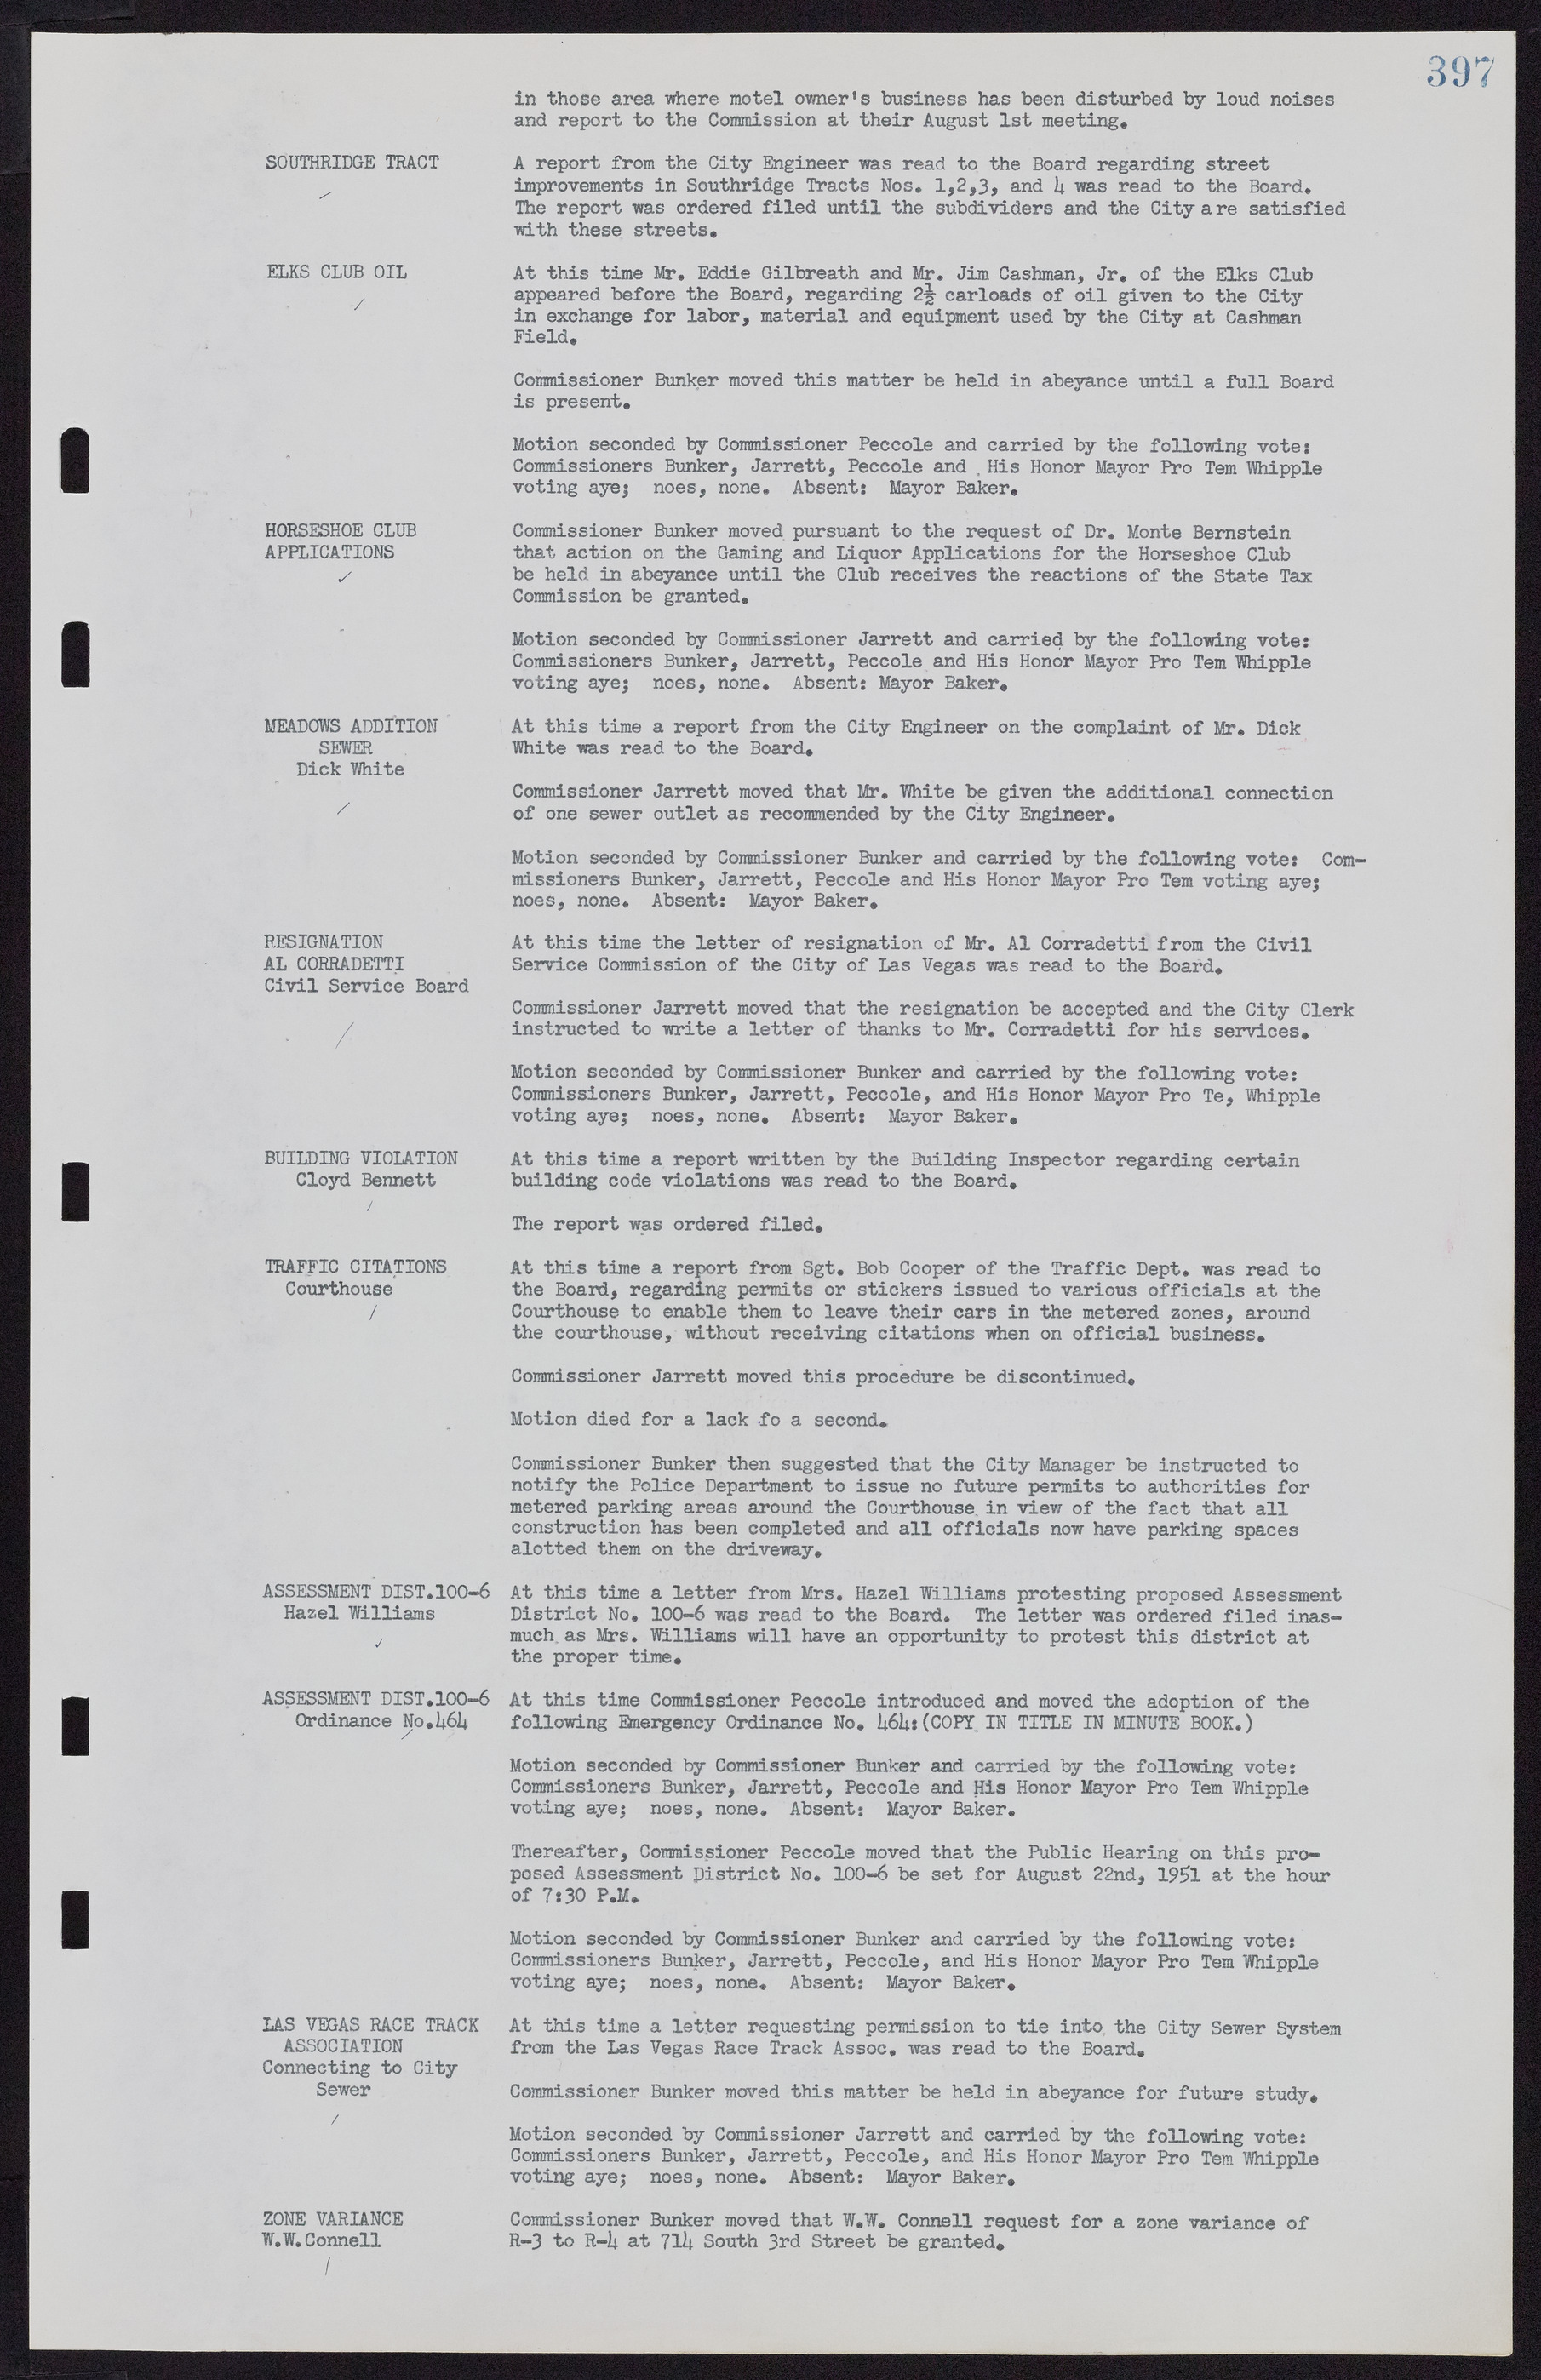 Las Vegas City Commission Minutes, November 7, 1949 to May 21, 1952, lvc000007-413